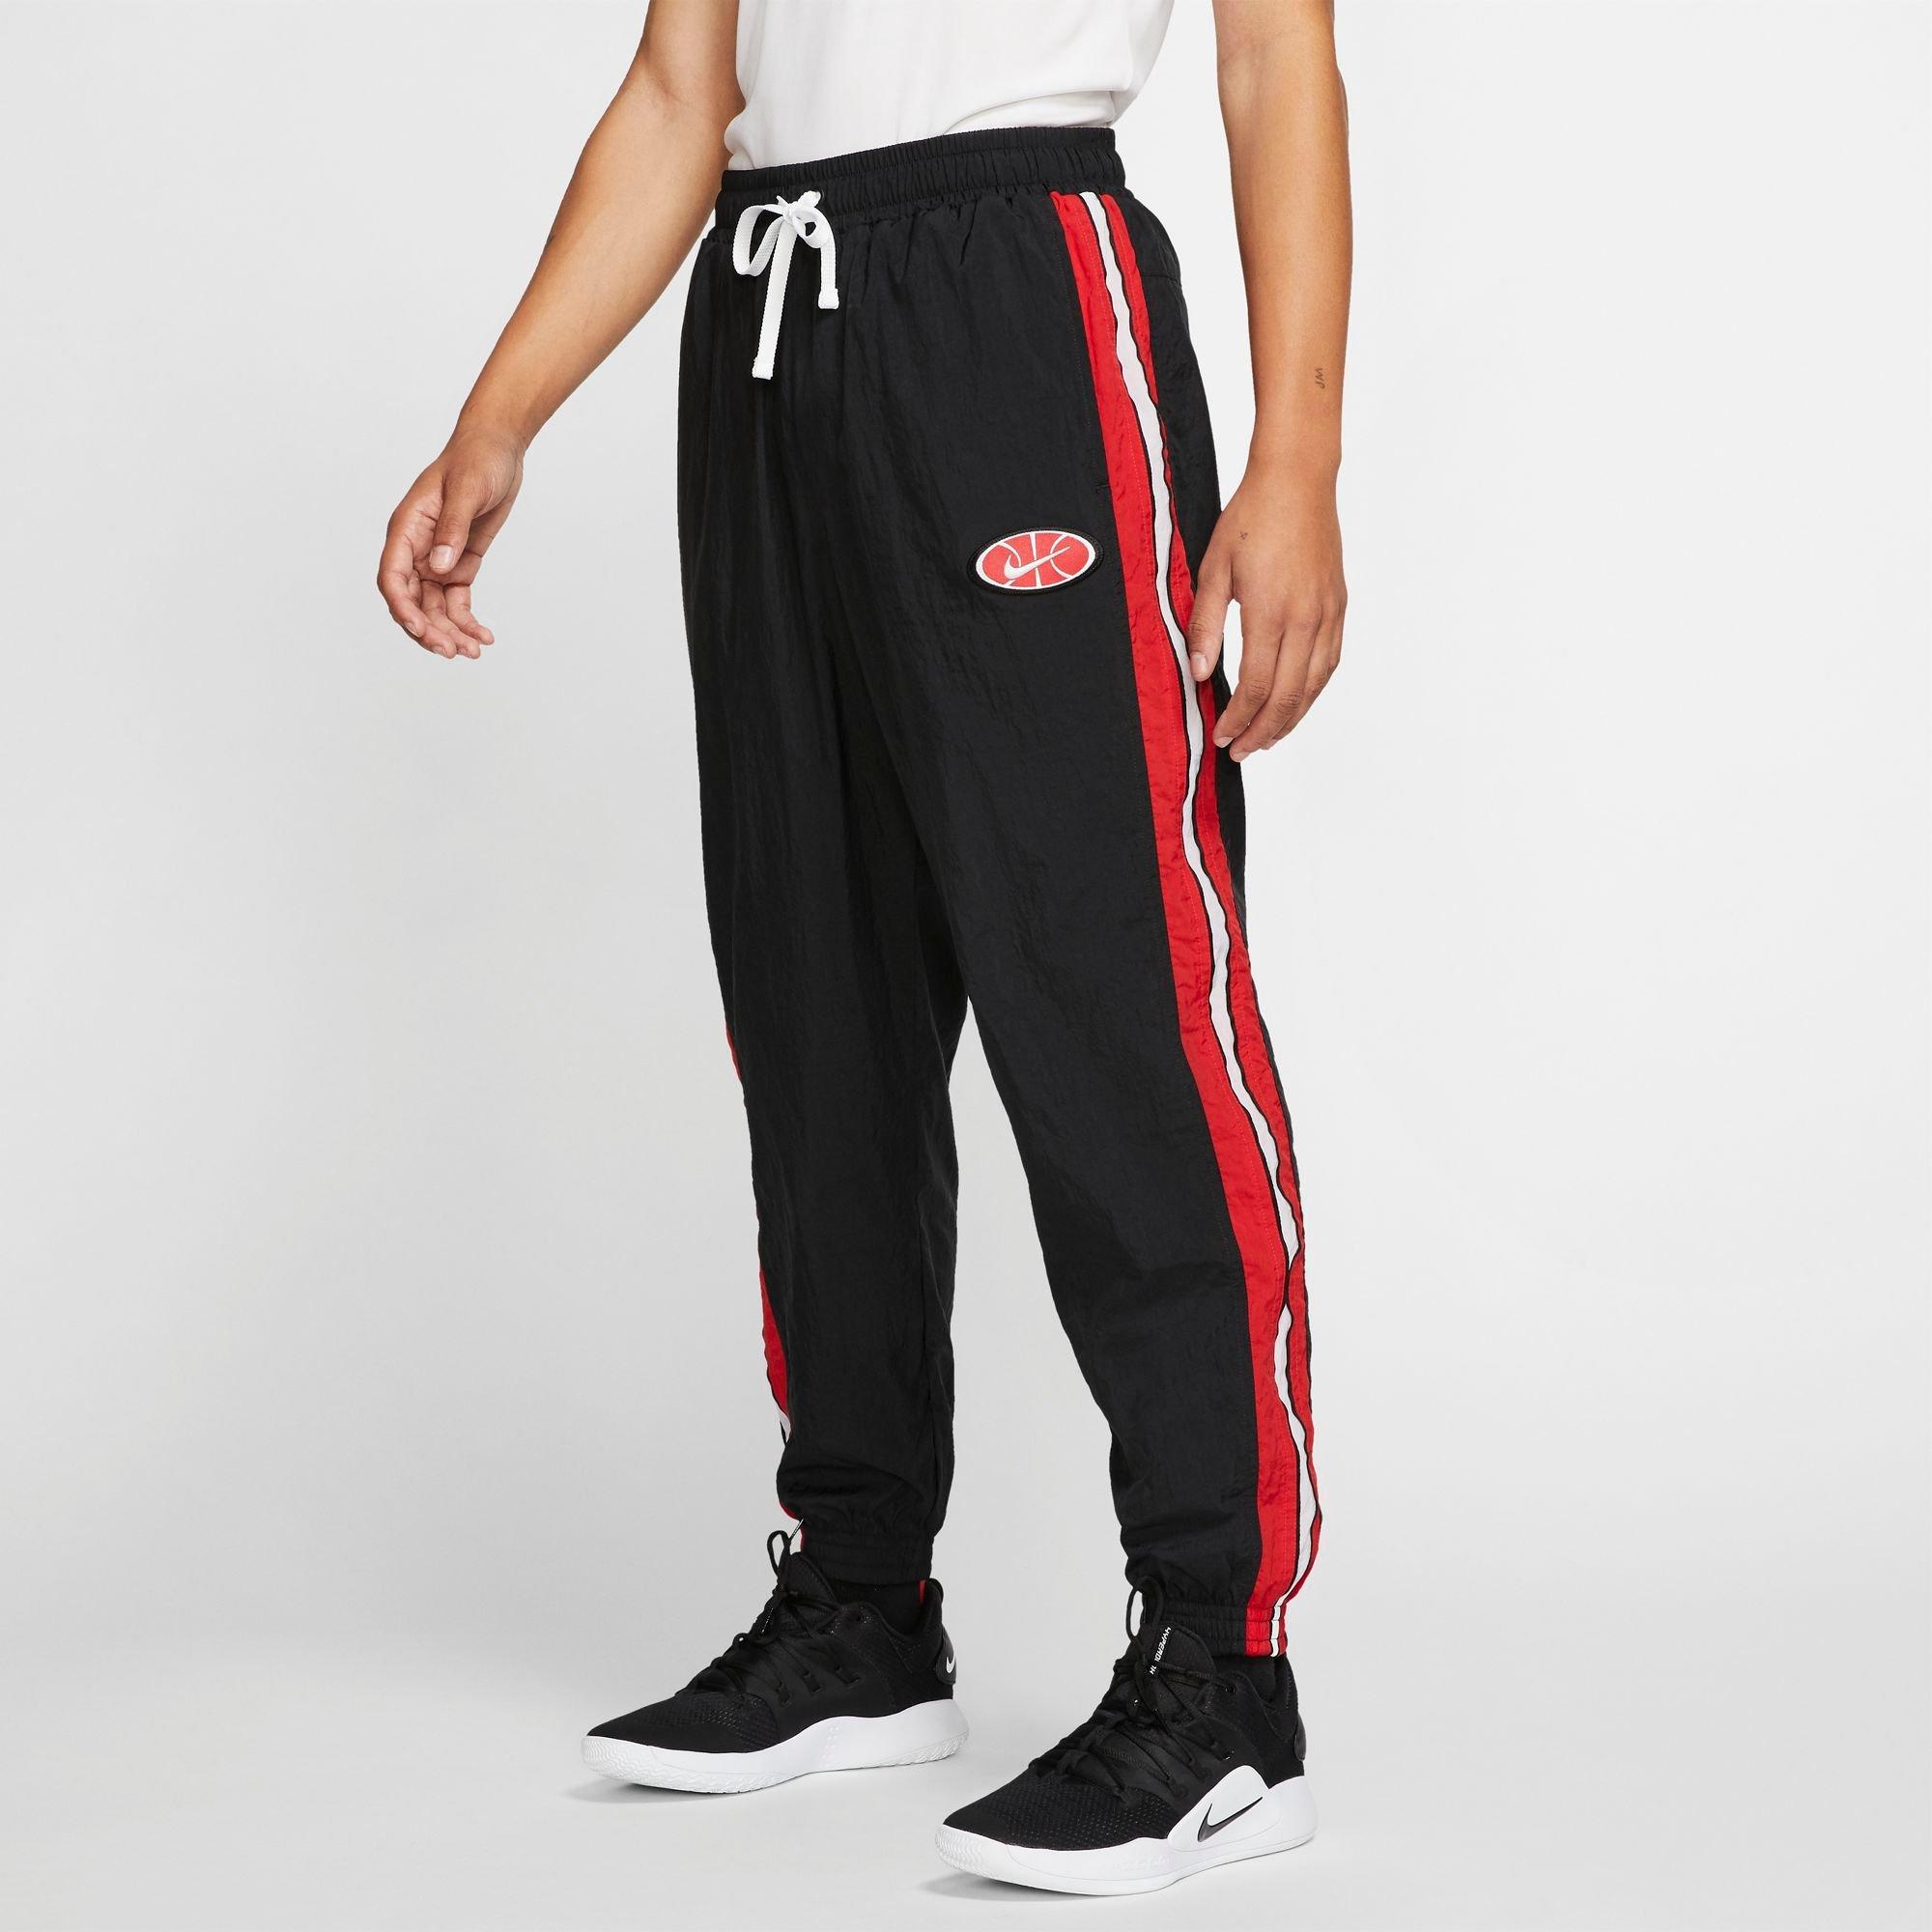 men's woven tracksuit basketball pants